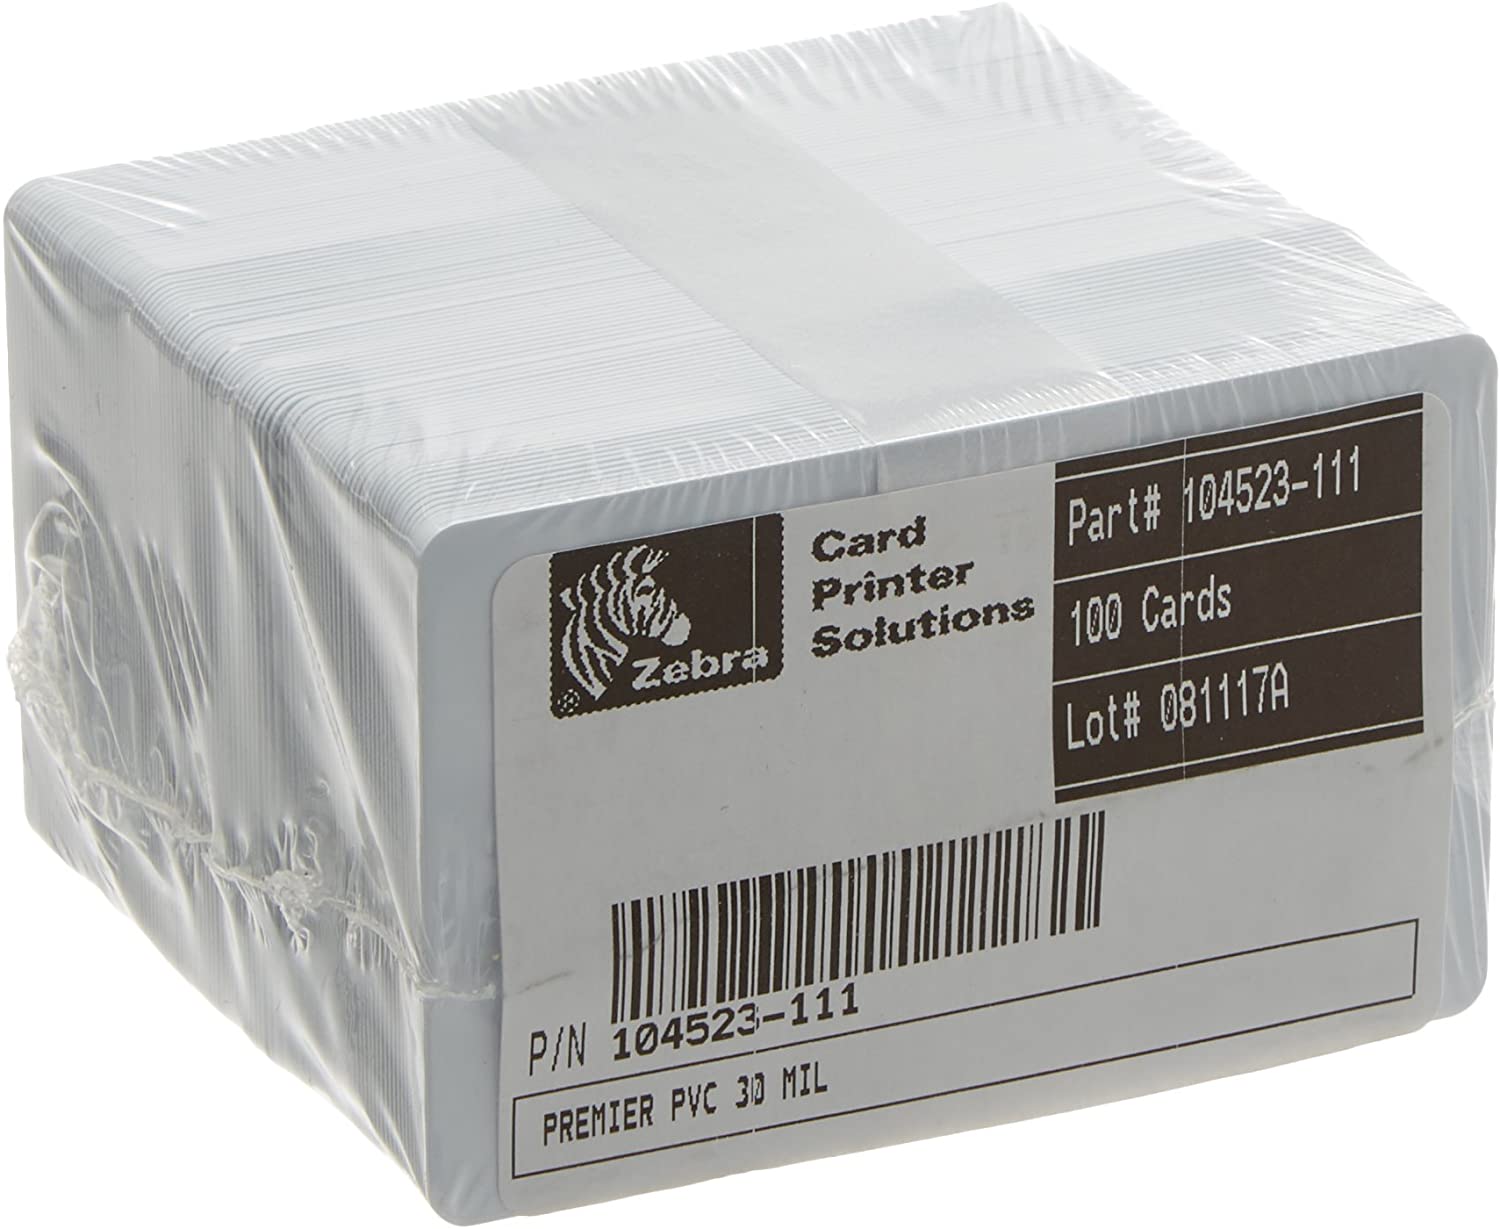 ZEBRA Premier PVC Card x100